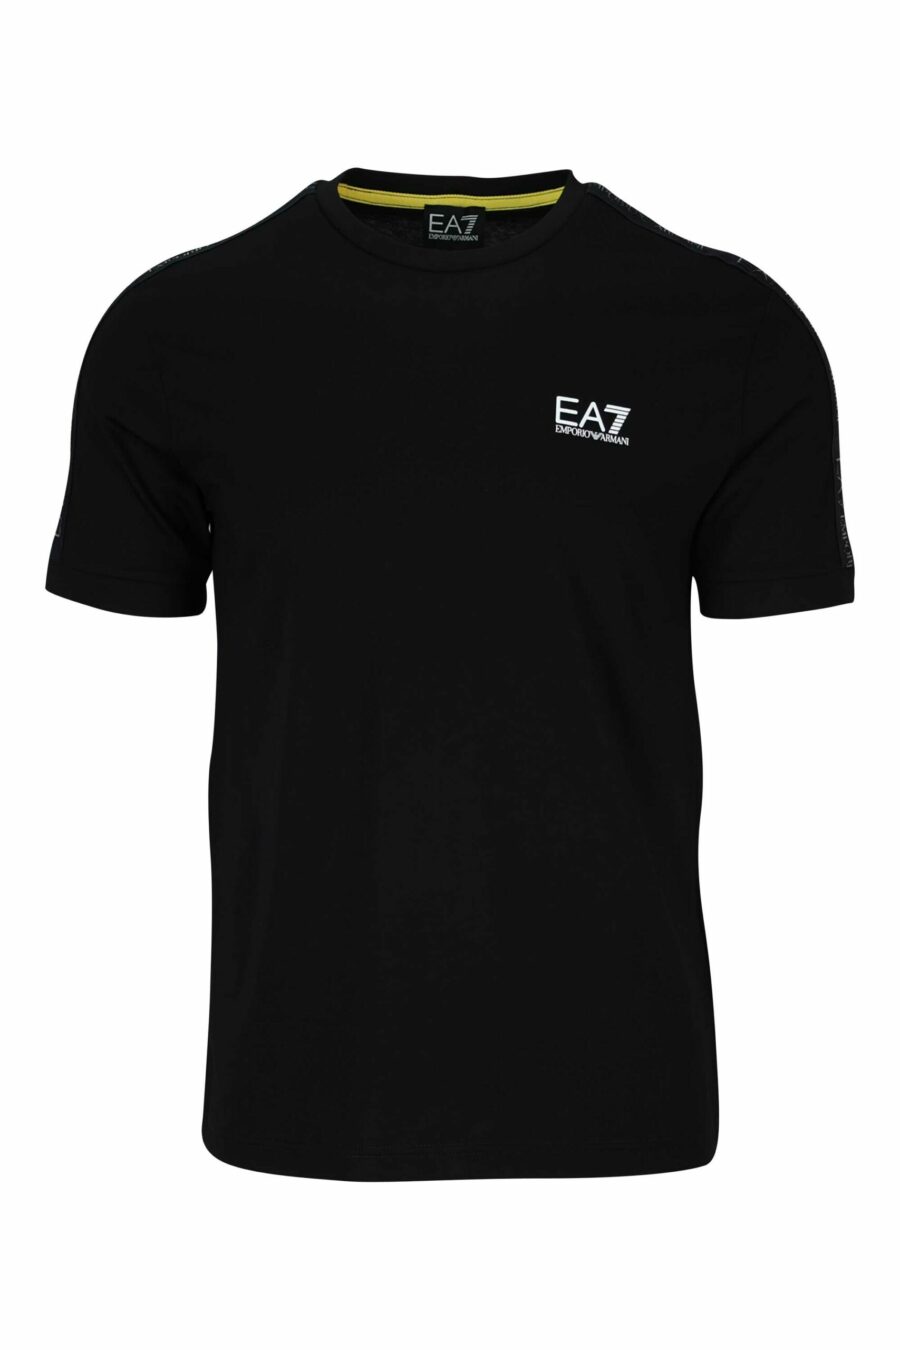 Camiseta negro con minilogo en cinta "lux identity" negro - 8058947490189 scaled